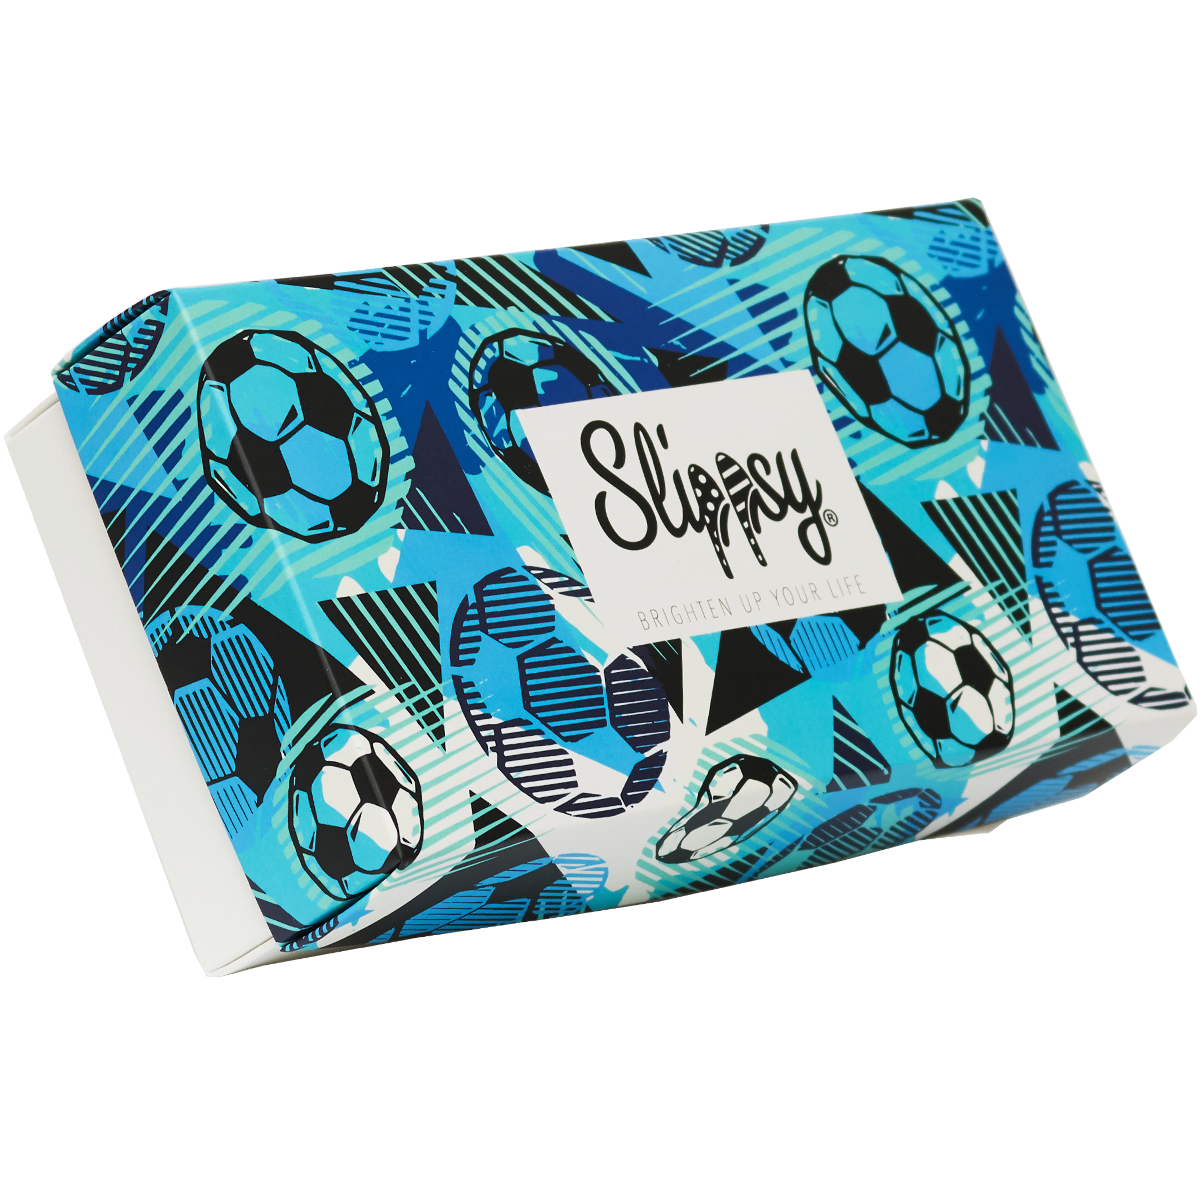 E-shop Slippsy Football box set